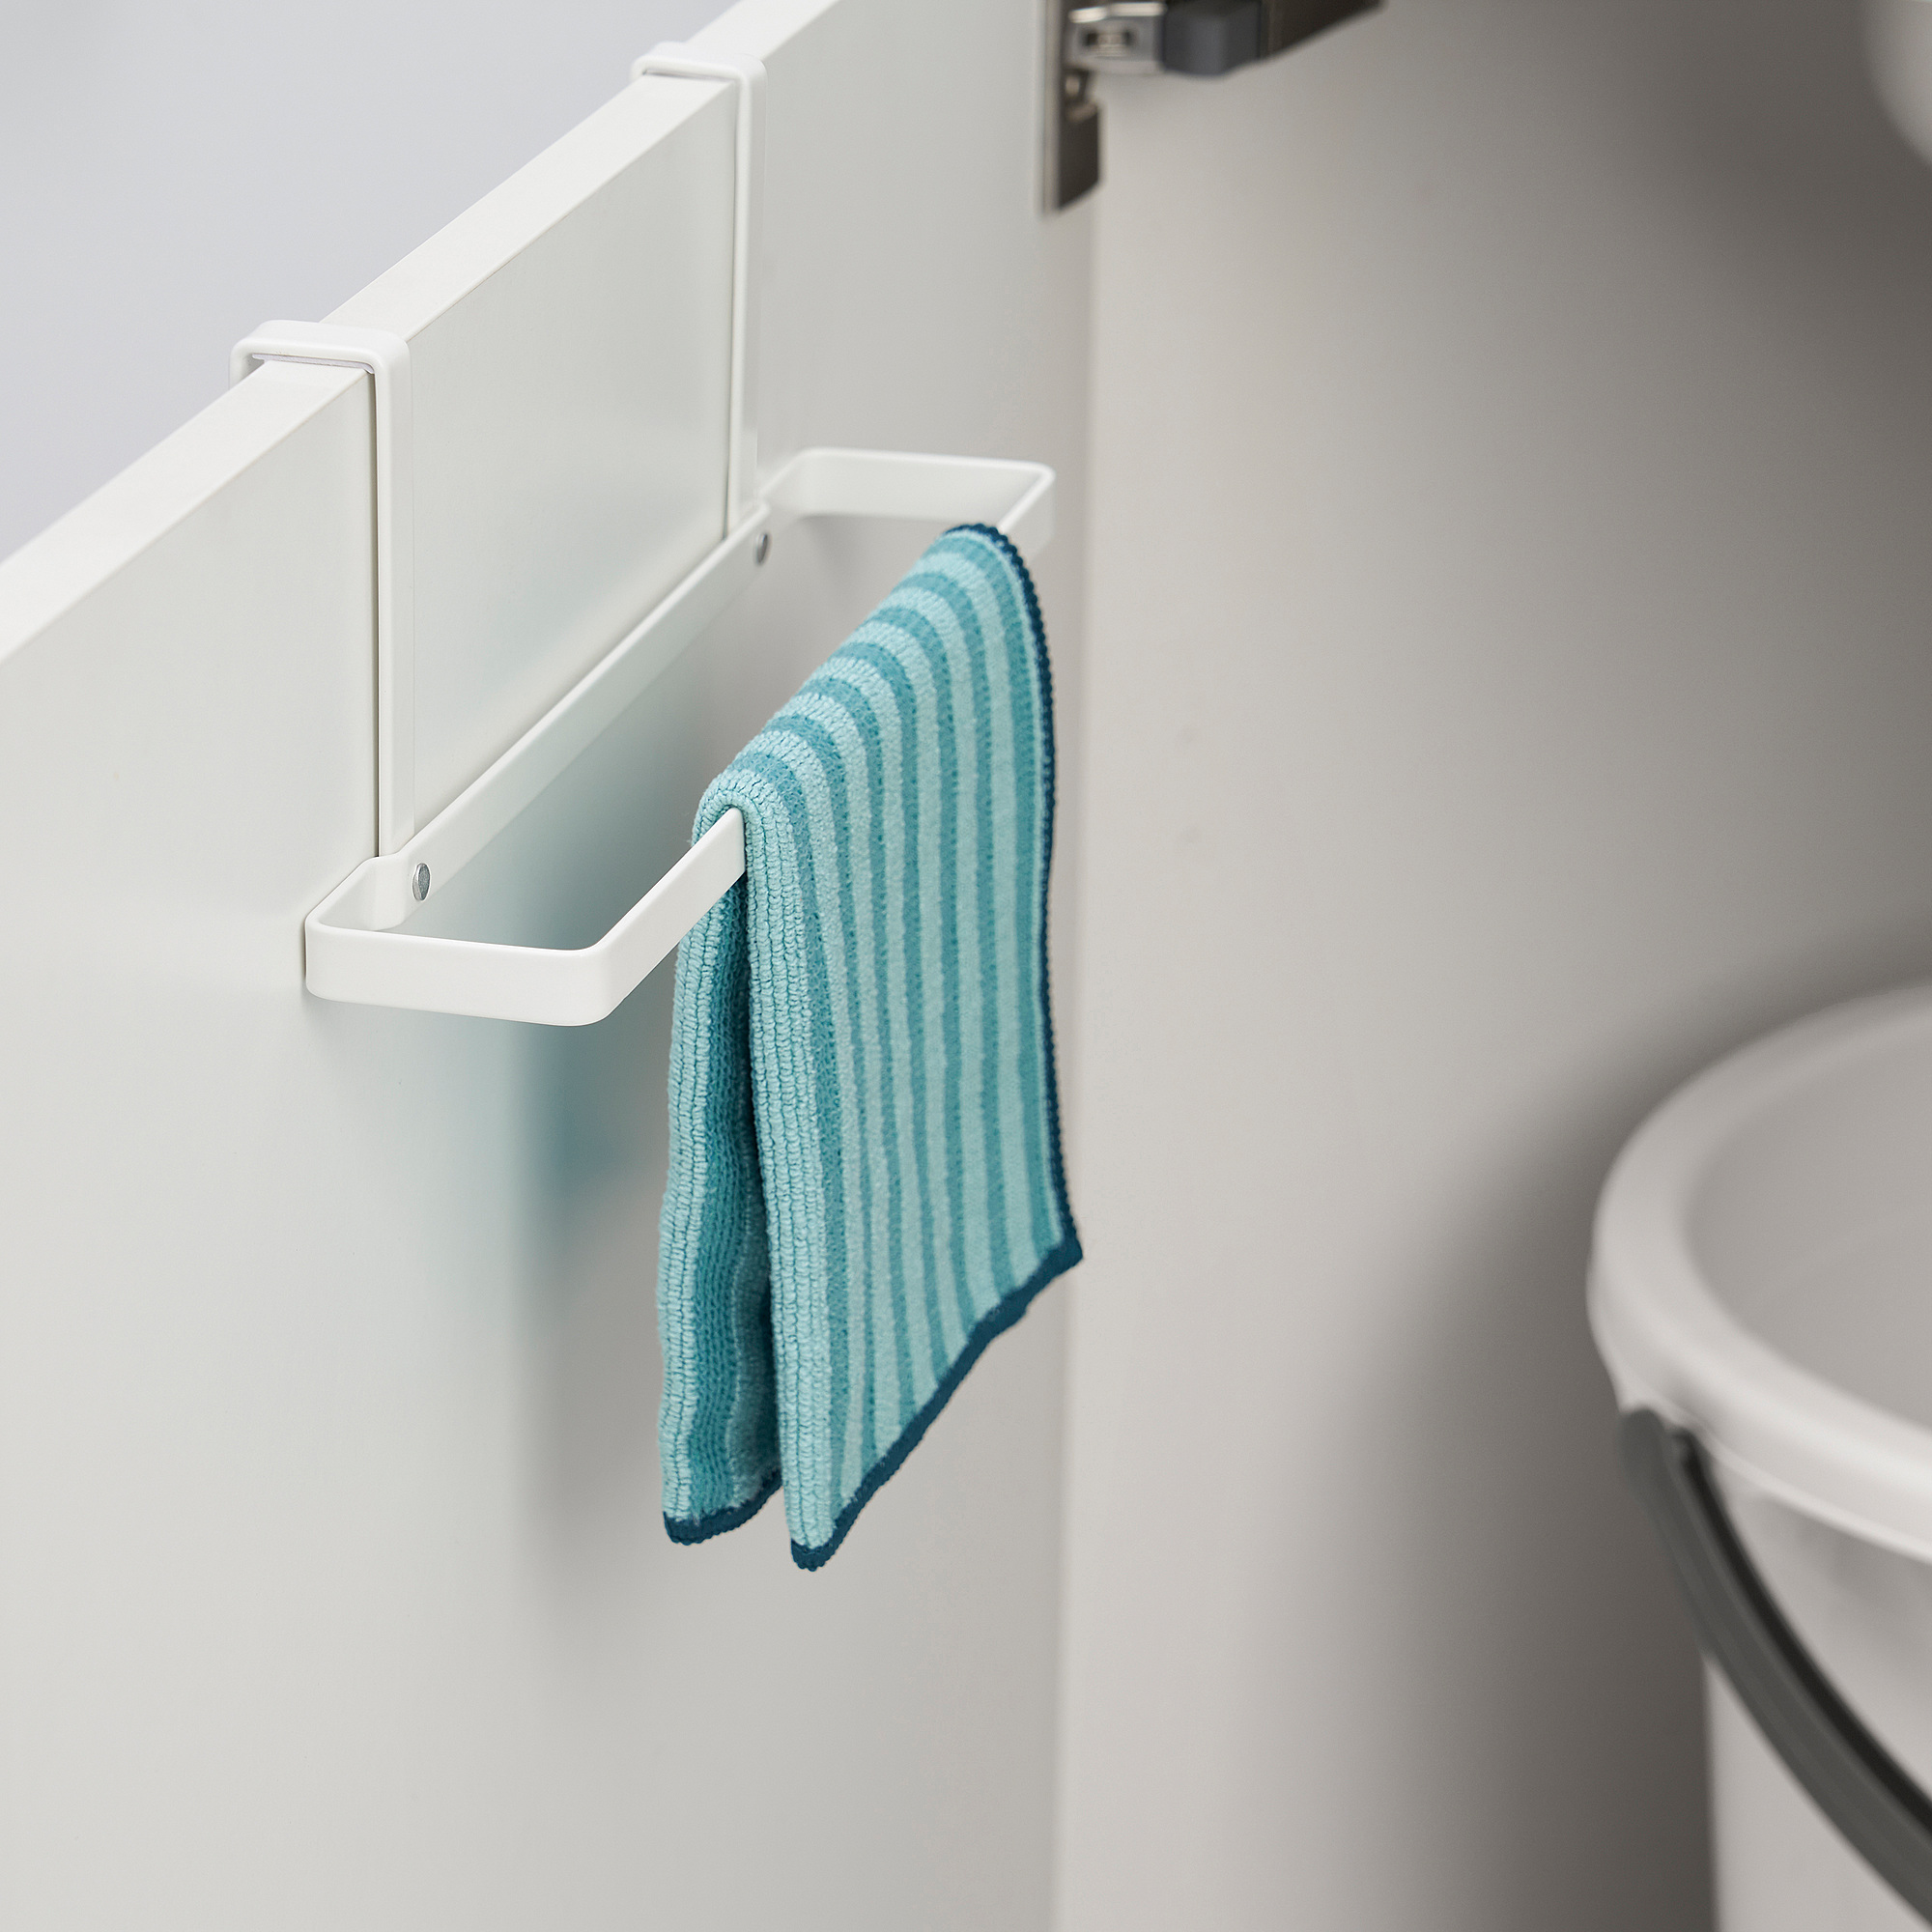 PÅLYCKE clip-on towel rack